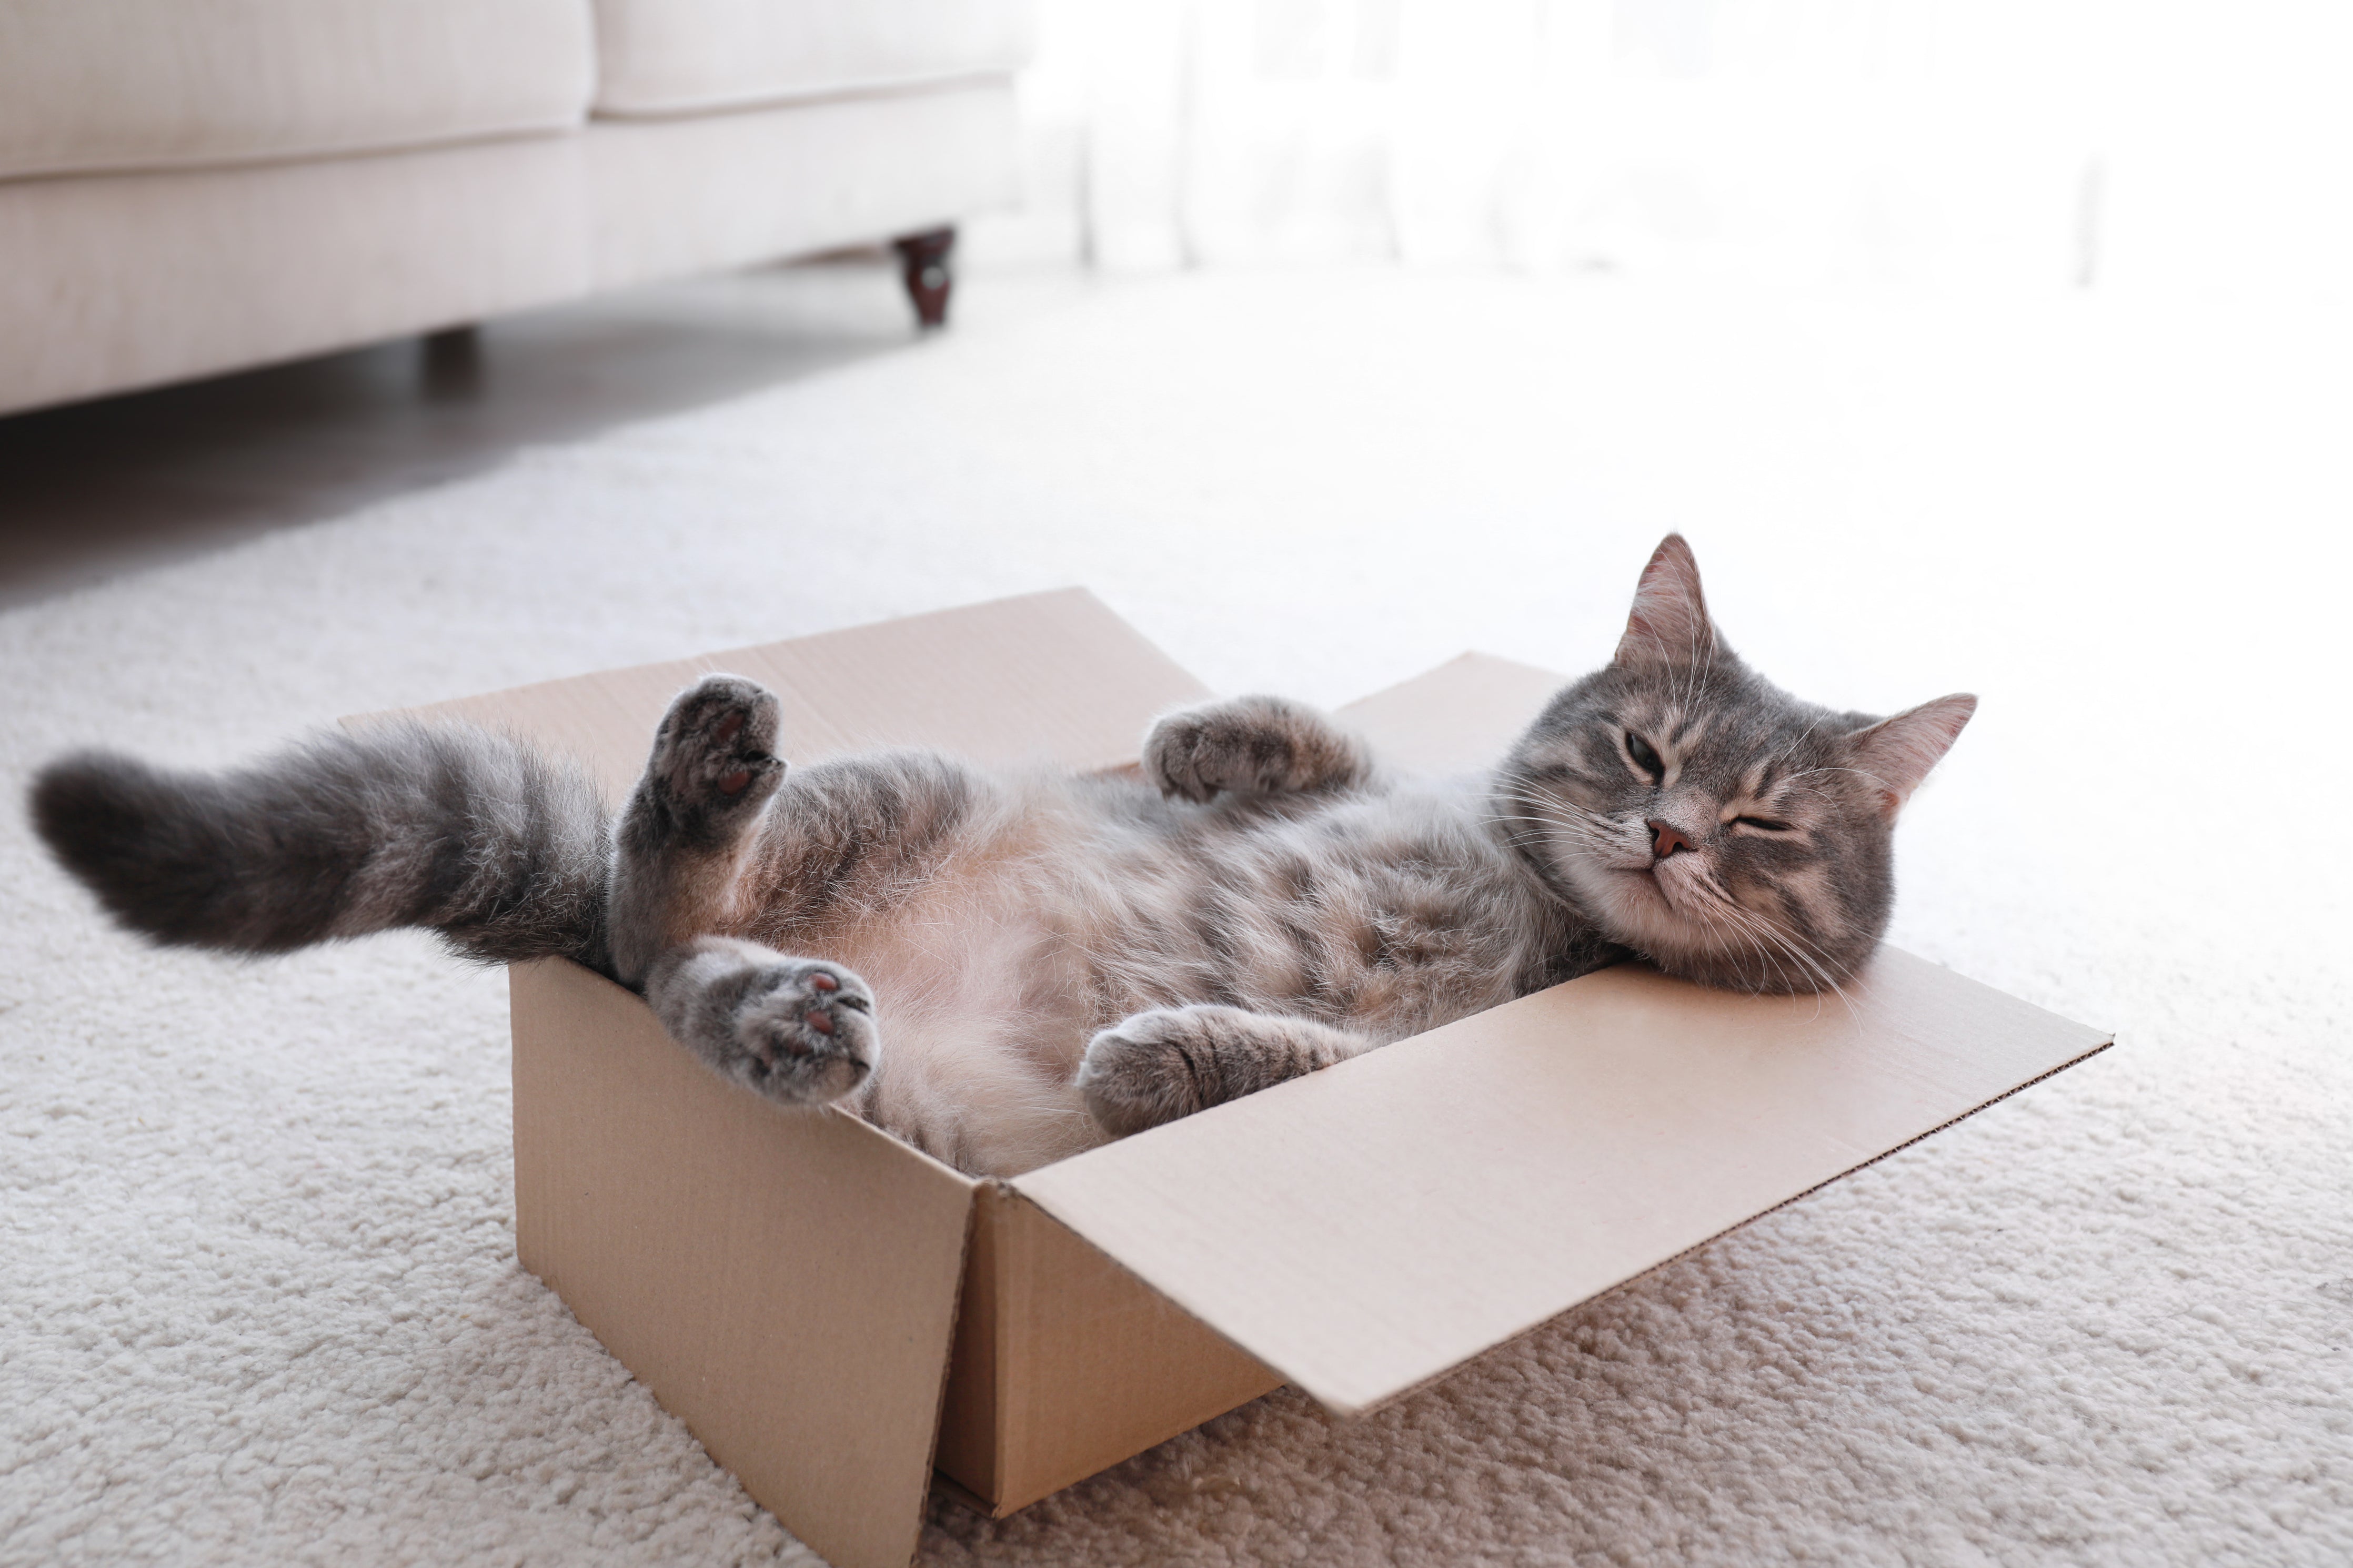 Cat lying in a cardboard box